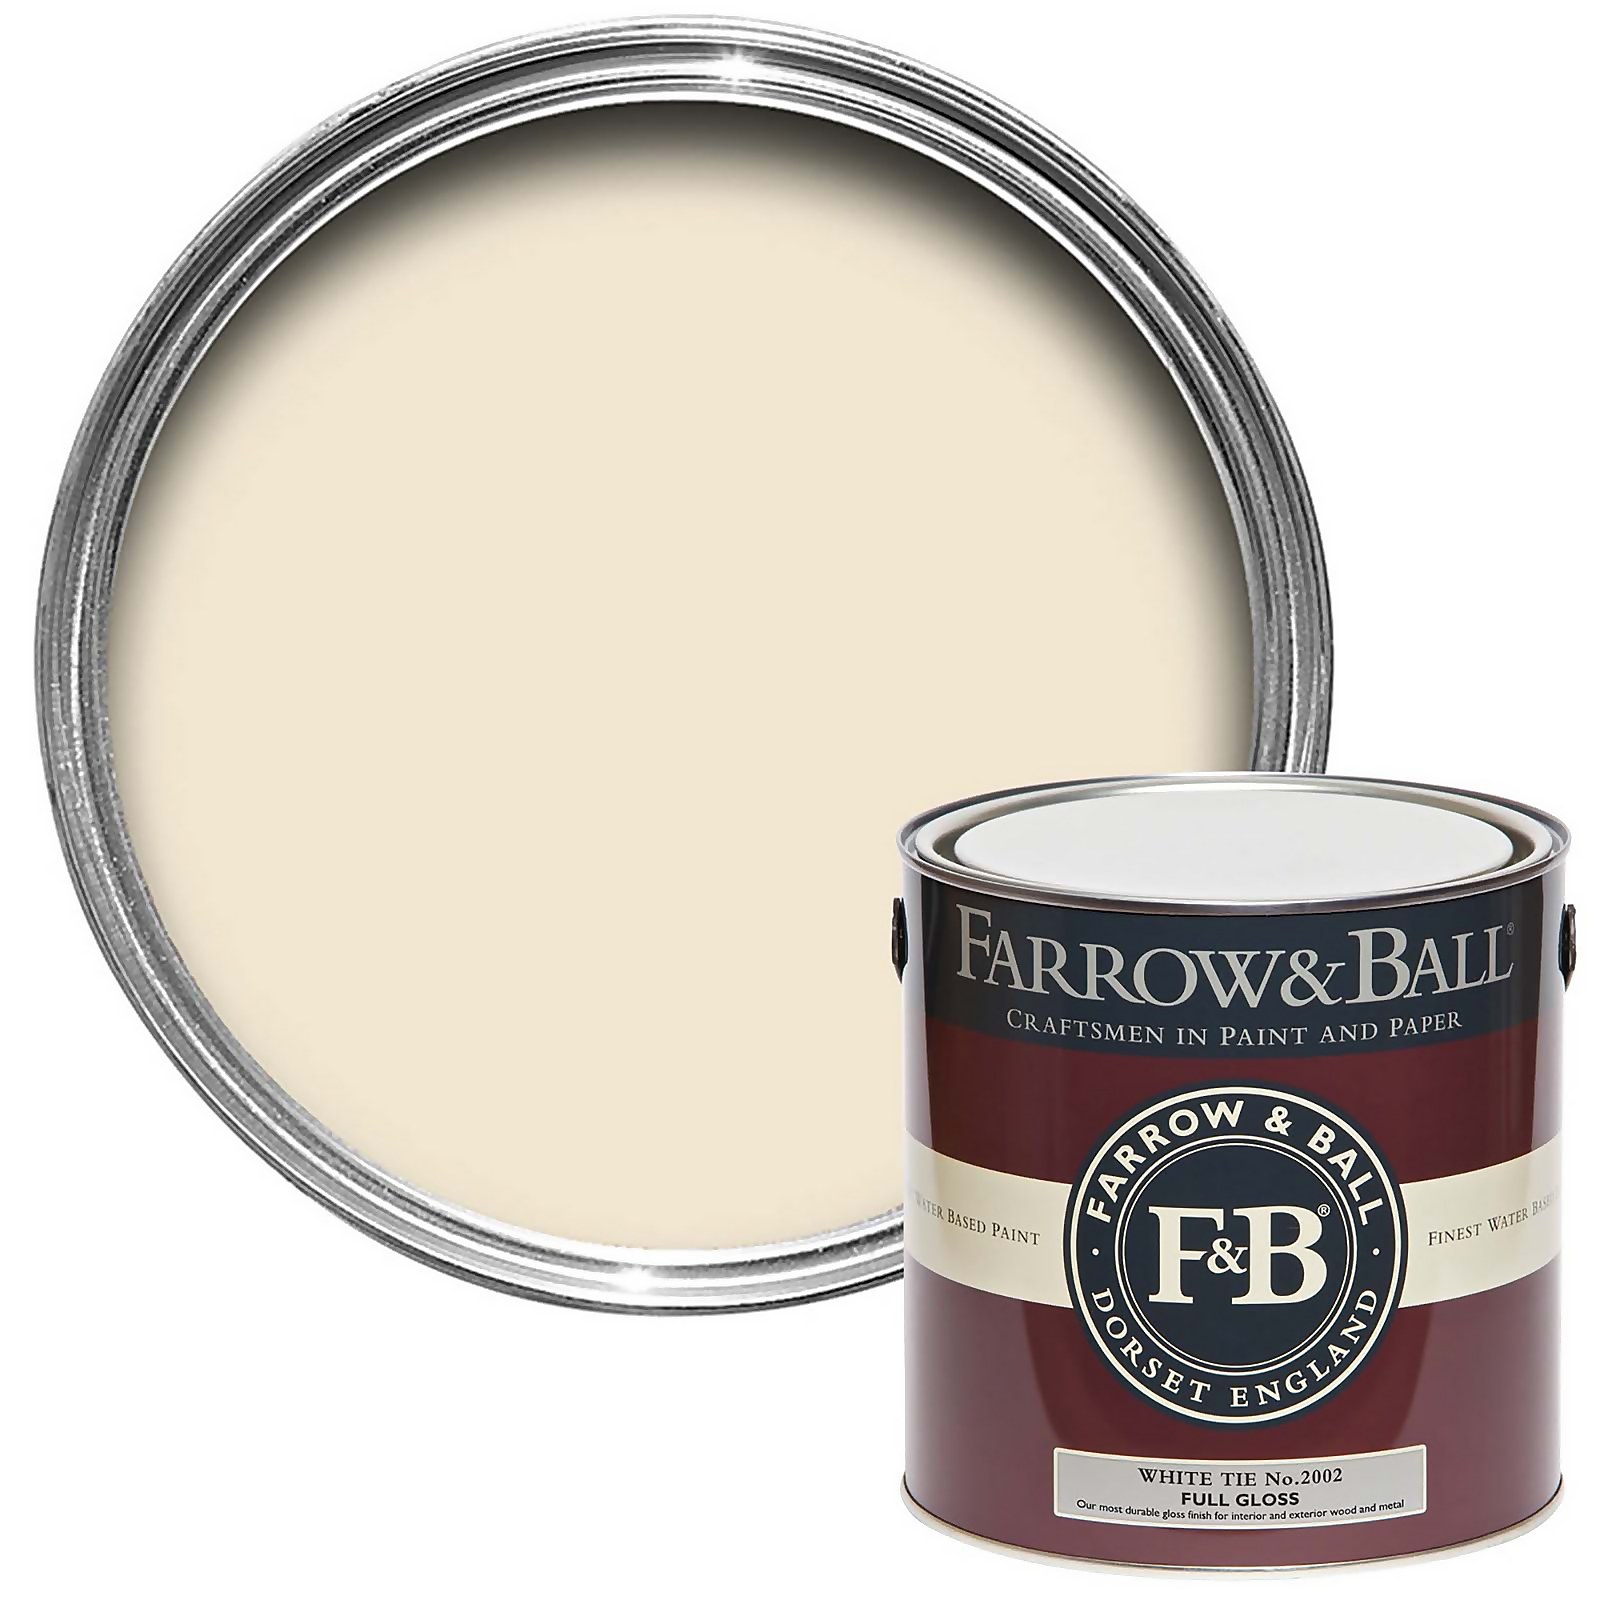 Farrow & Ball Full Gloss Paint White Tie No.2002 - 2.5L